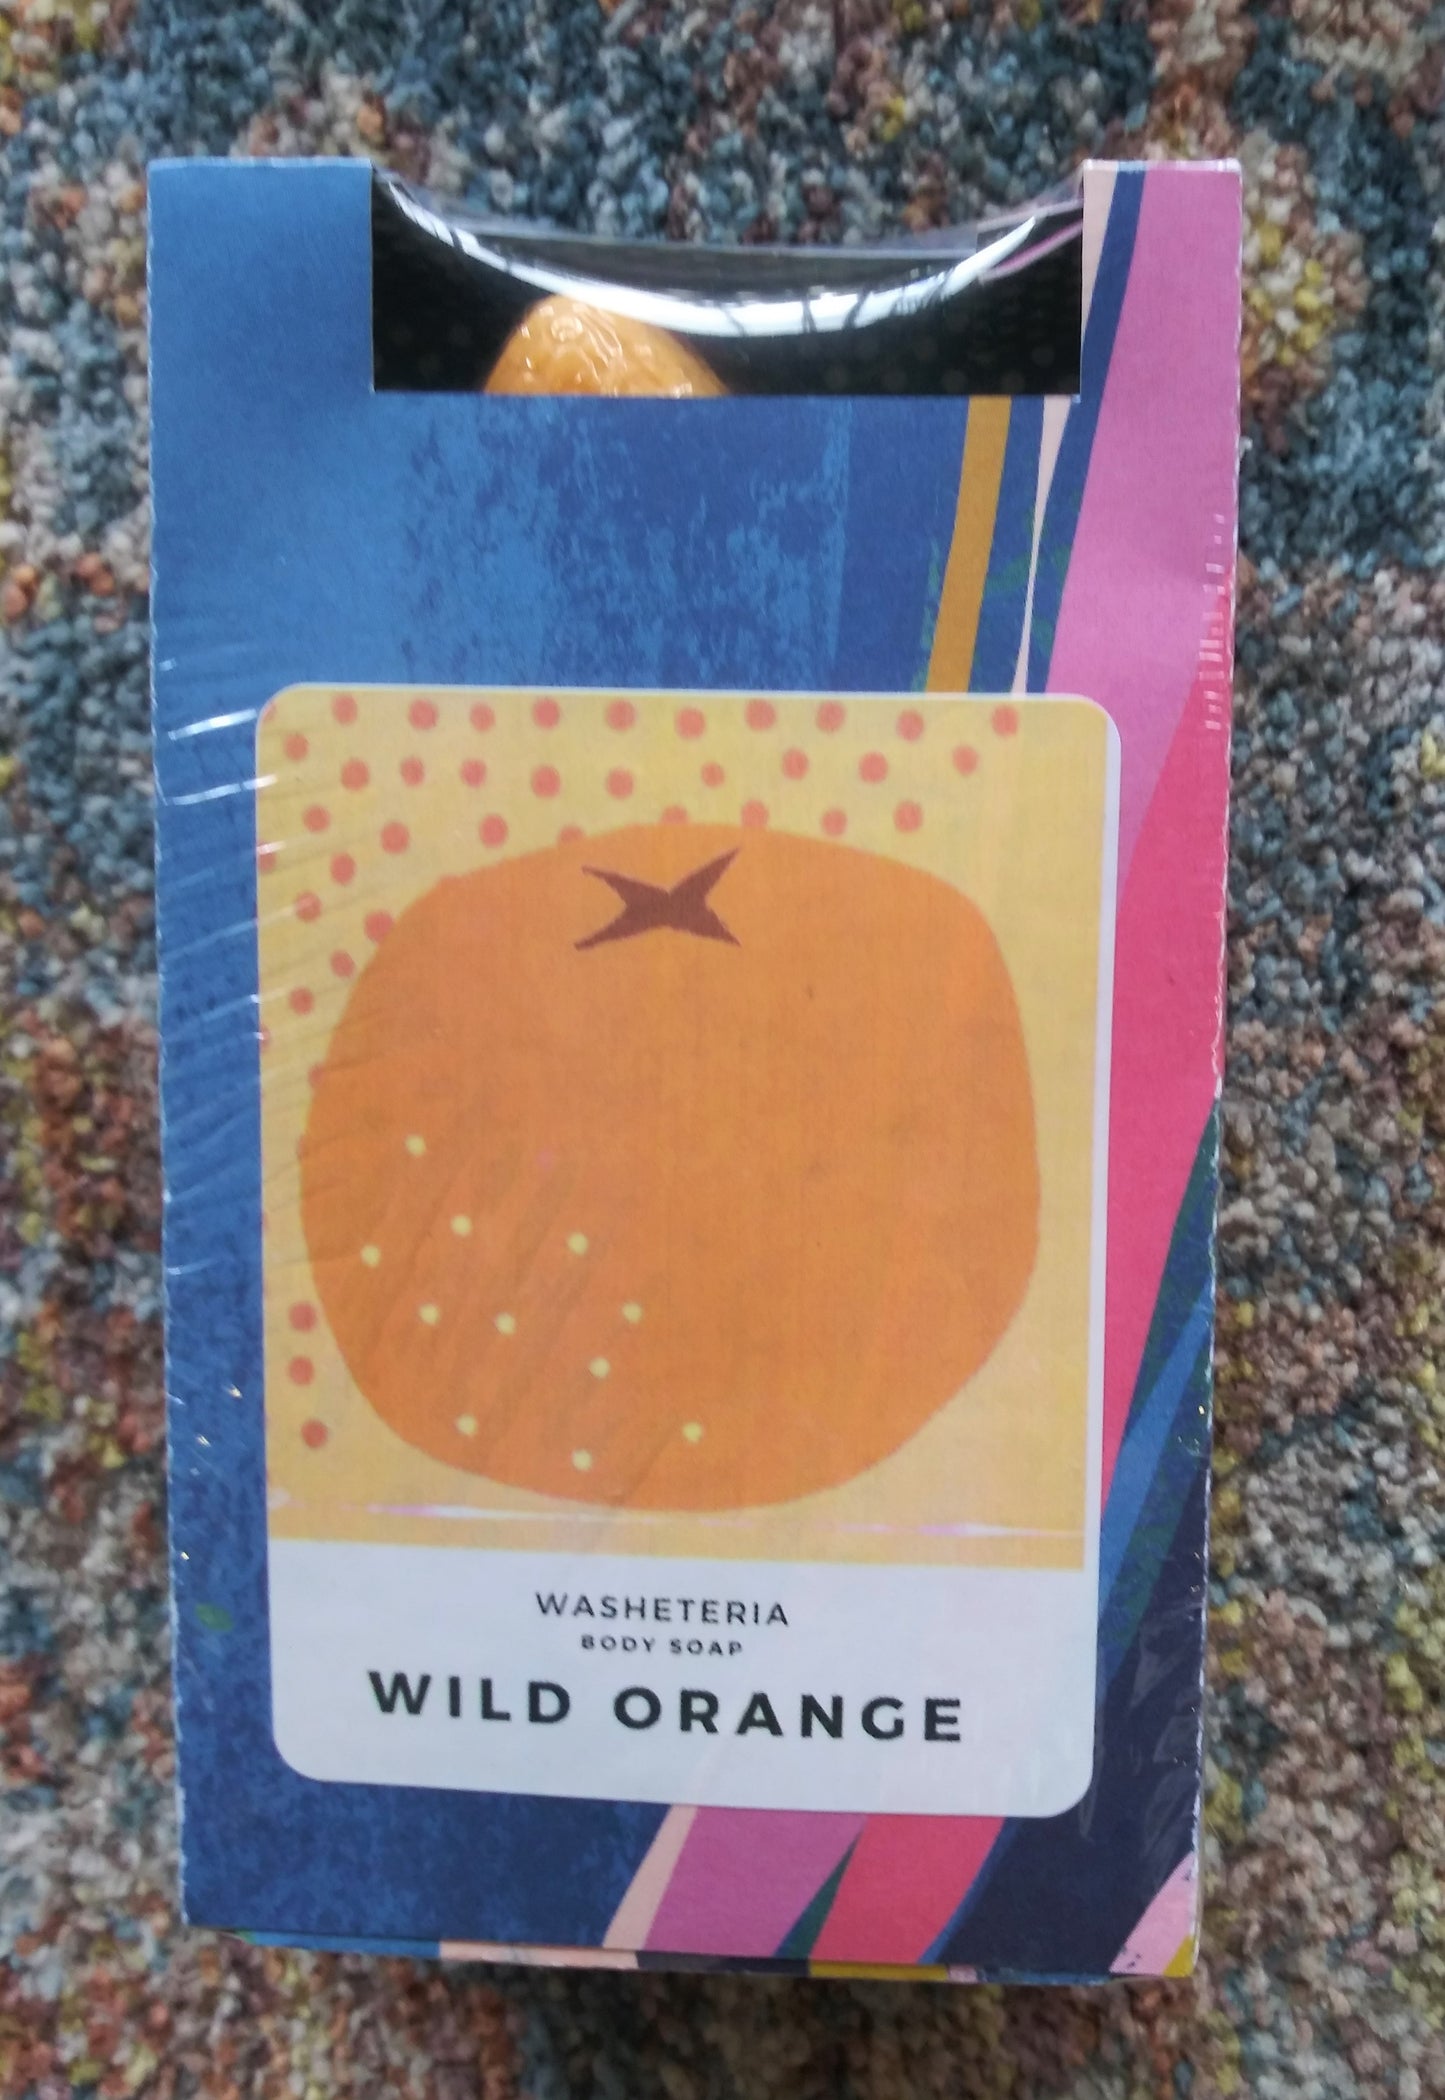 Washeteria Soap Co. - Wild Orange Soap